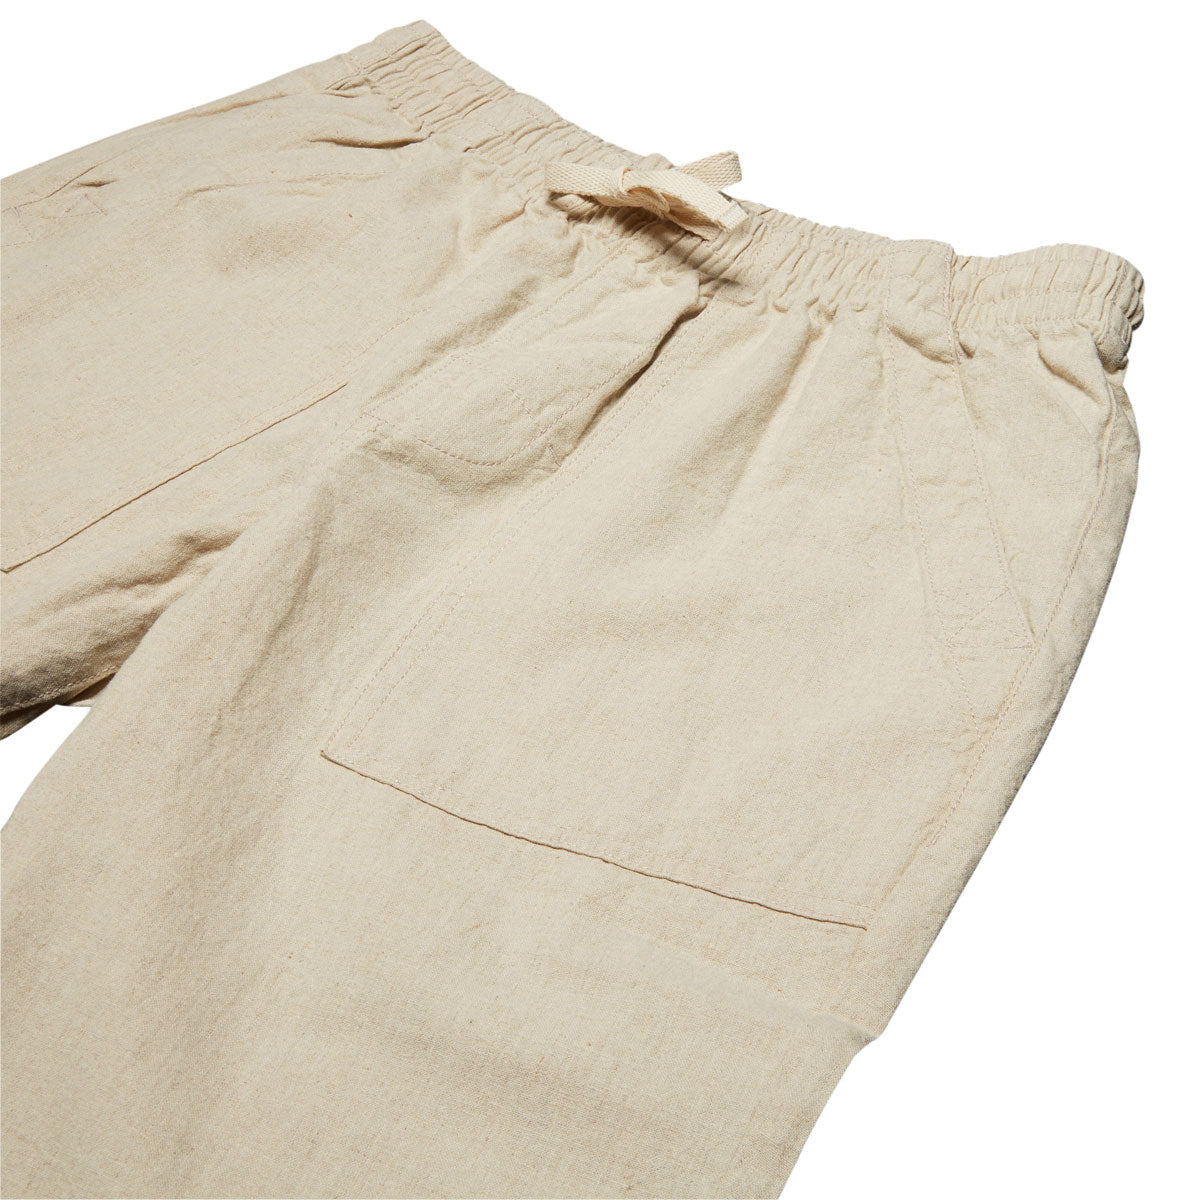 Rhythm Linen Fatigue Jam Pants - Natural image 2